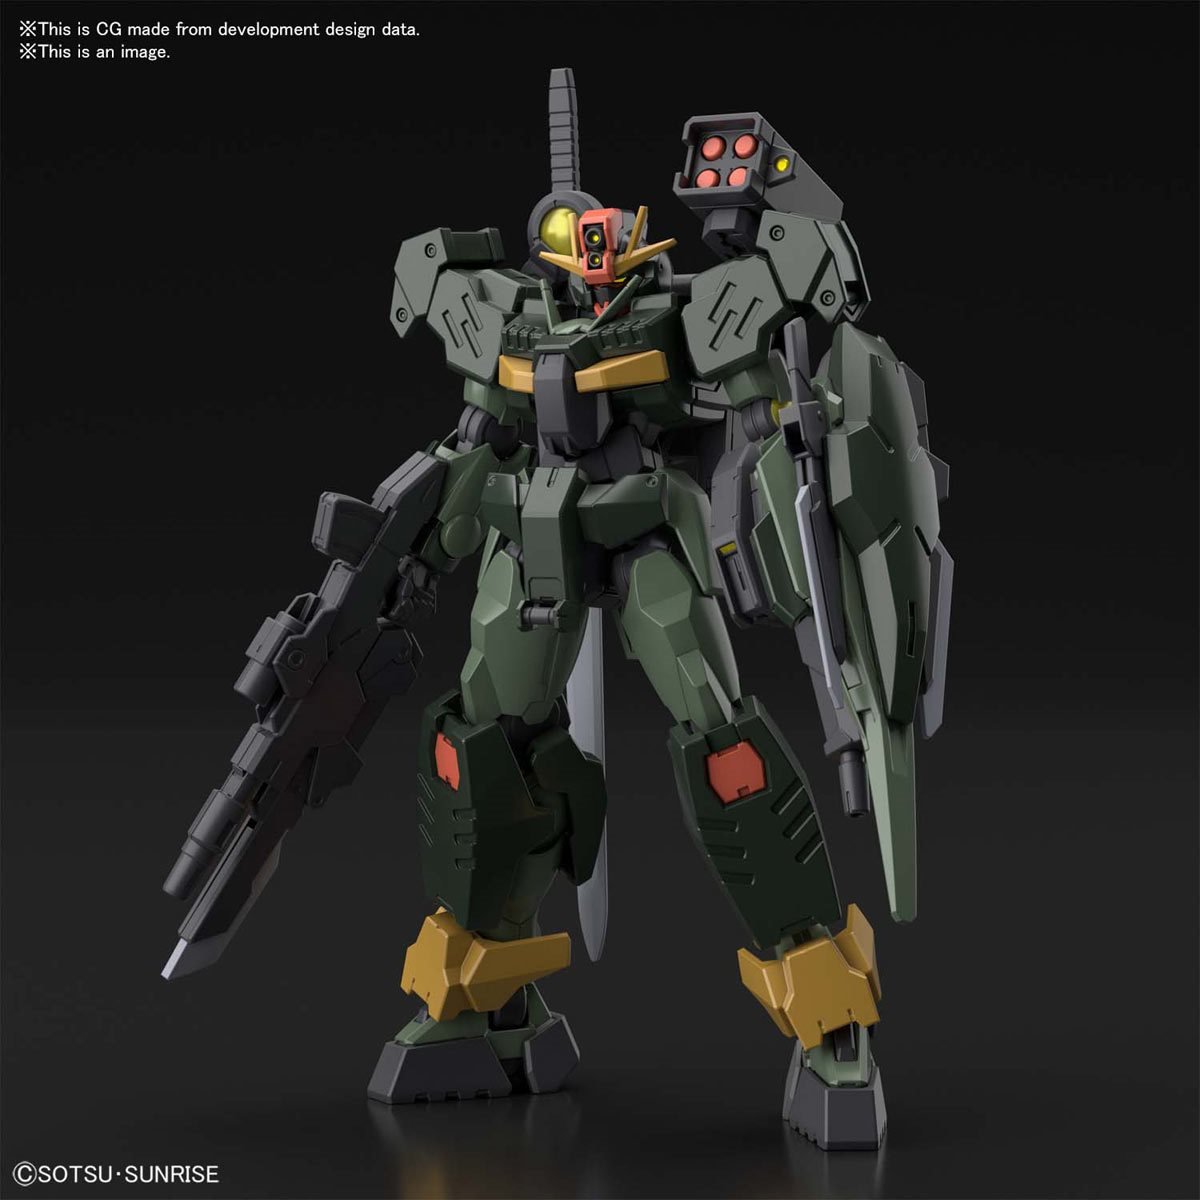 HGGBB #06 Gundam 00 Command QAN[T]